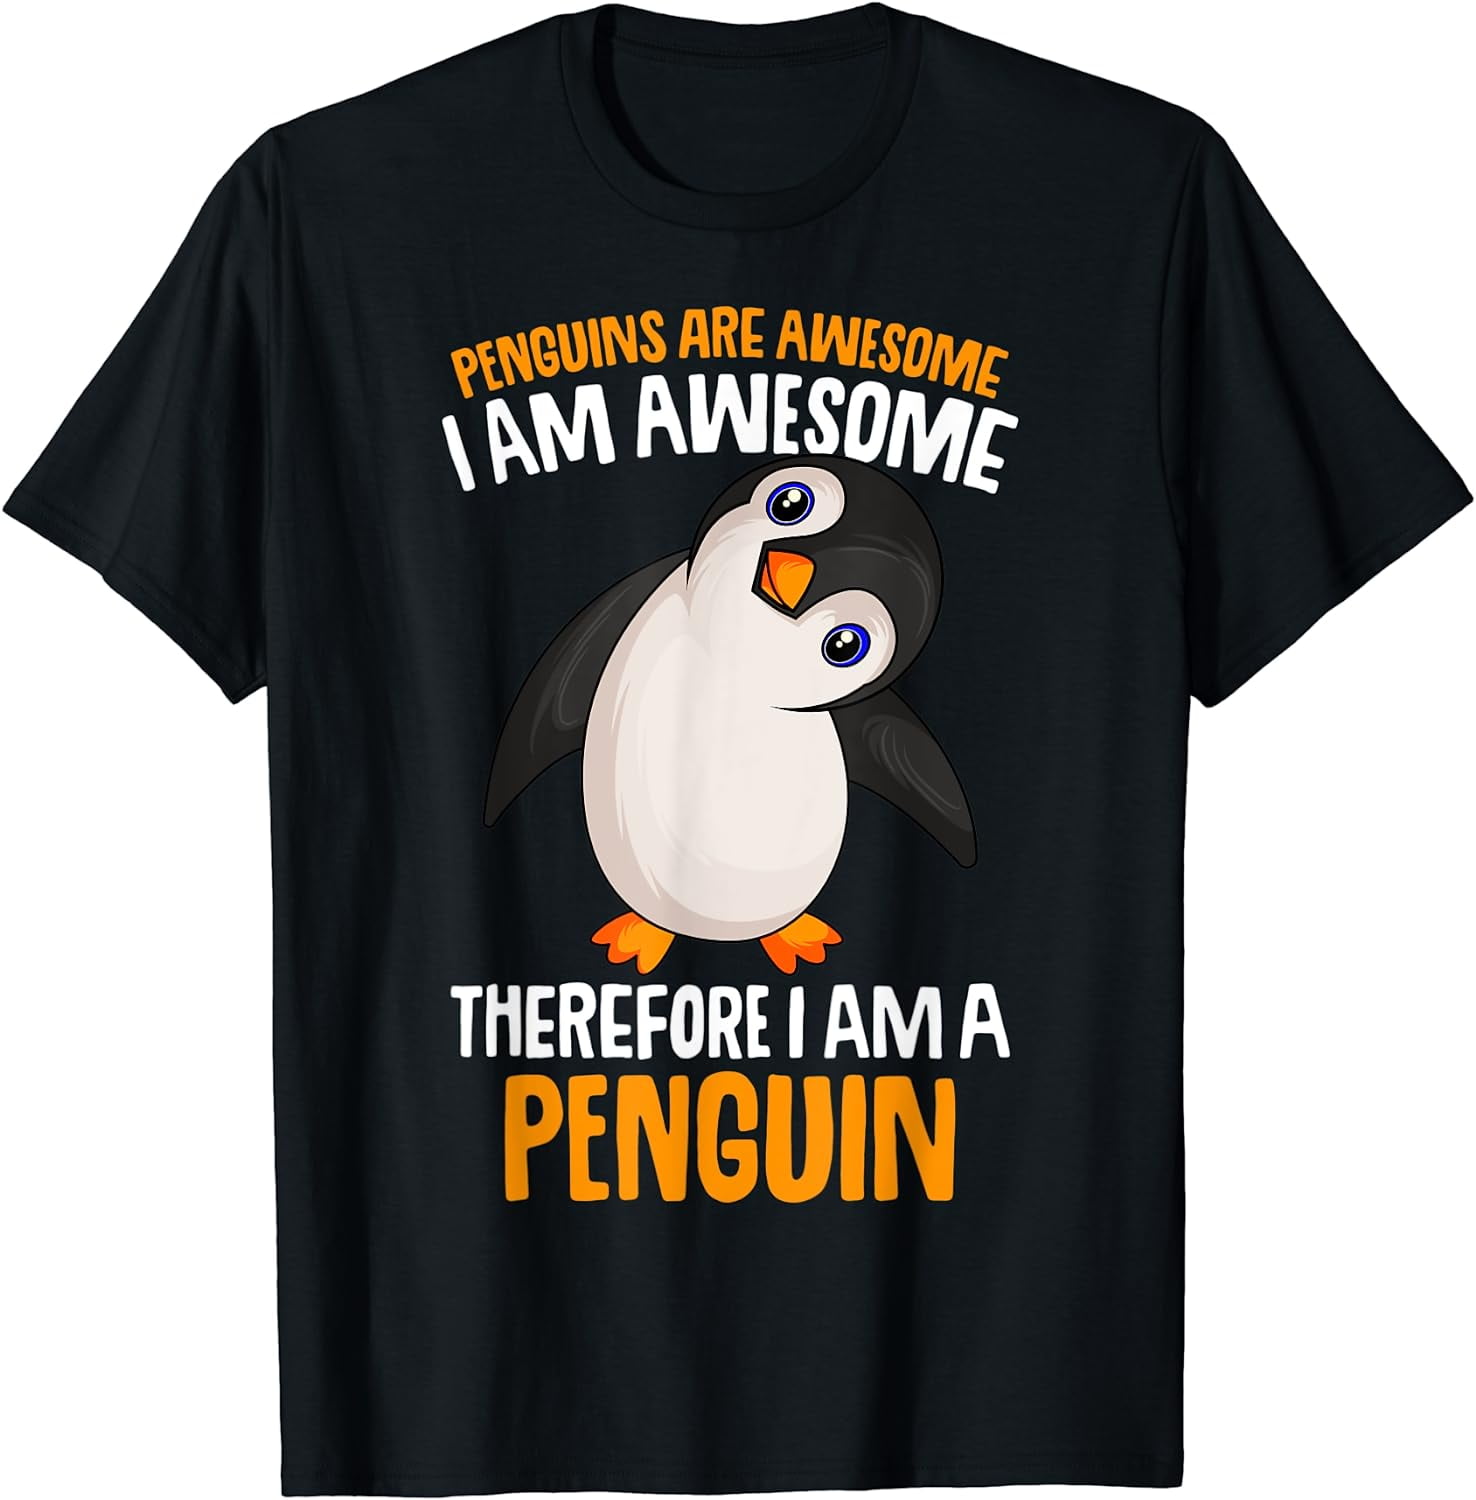 Penguins Are Awesome Girl Kids Boys Women Penguin T-Shirt - Walmart.com